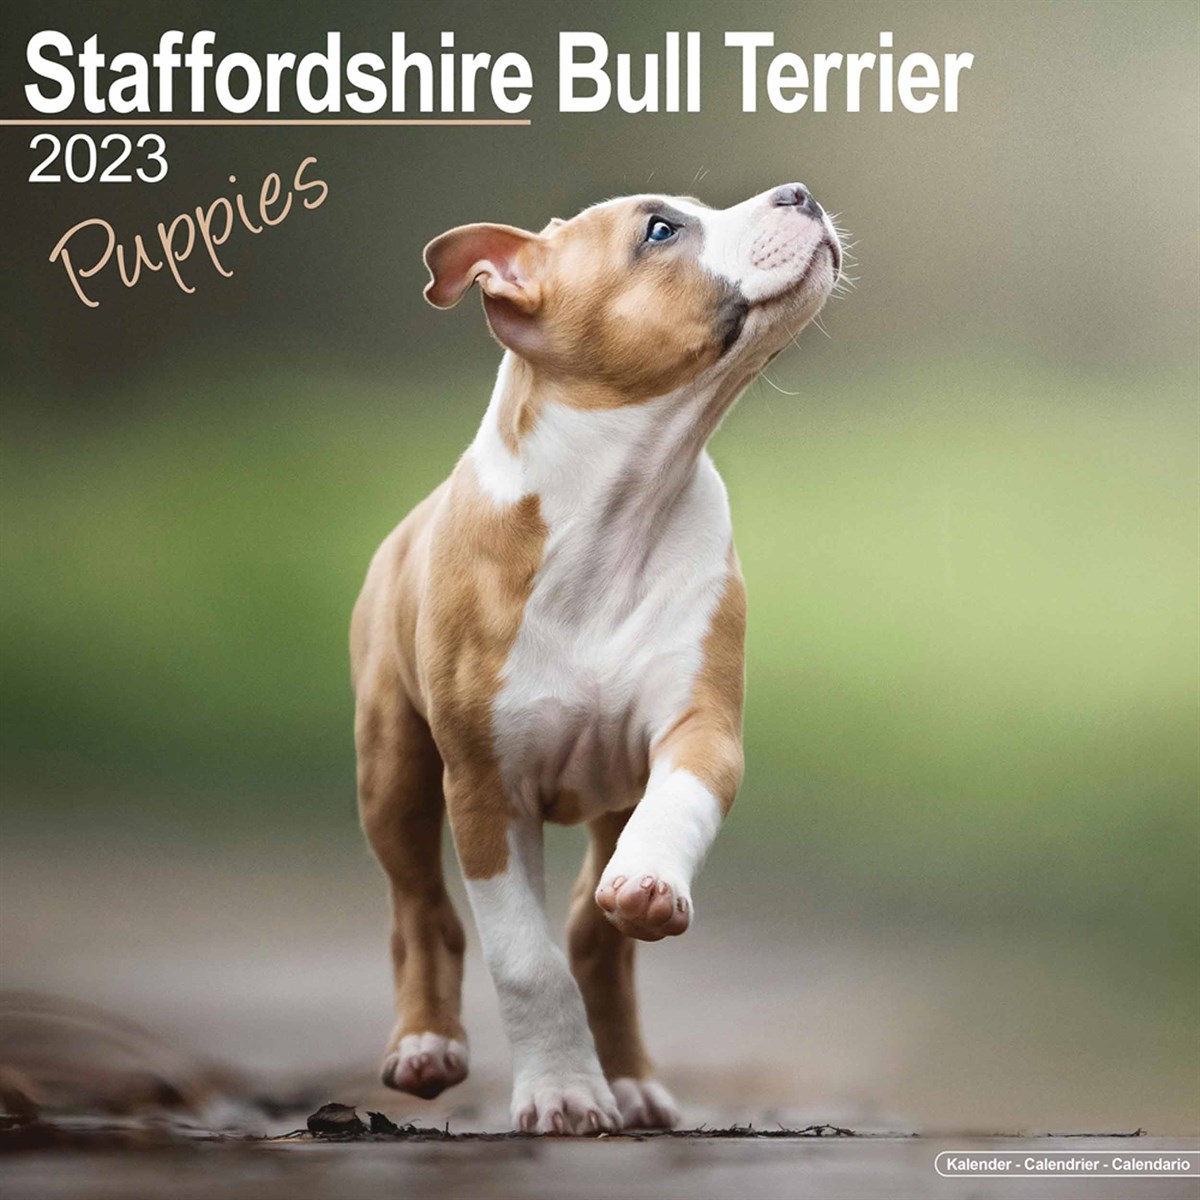 Staffordshire Bull Terrier Puppies 2023 Calendars